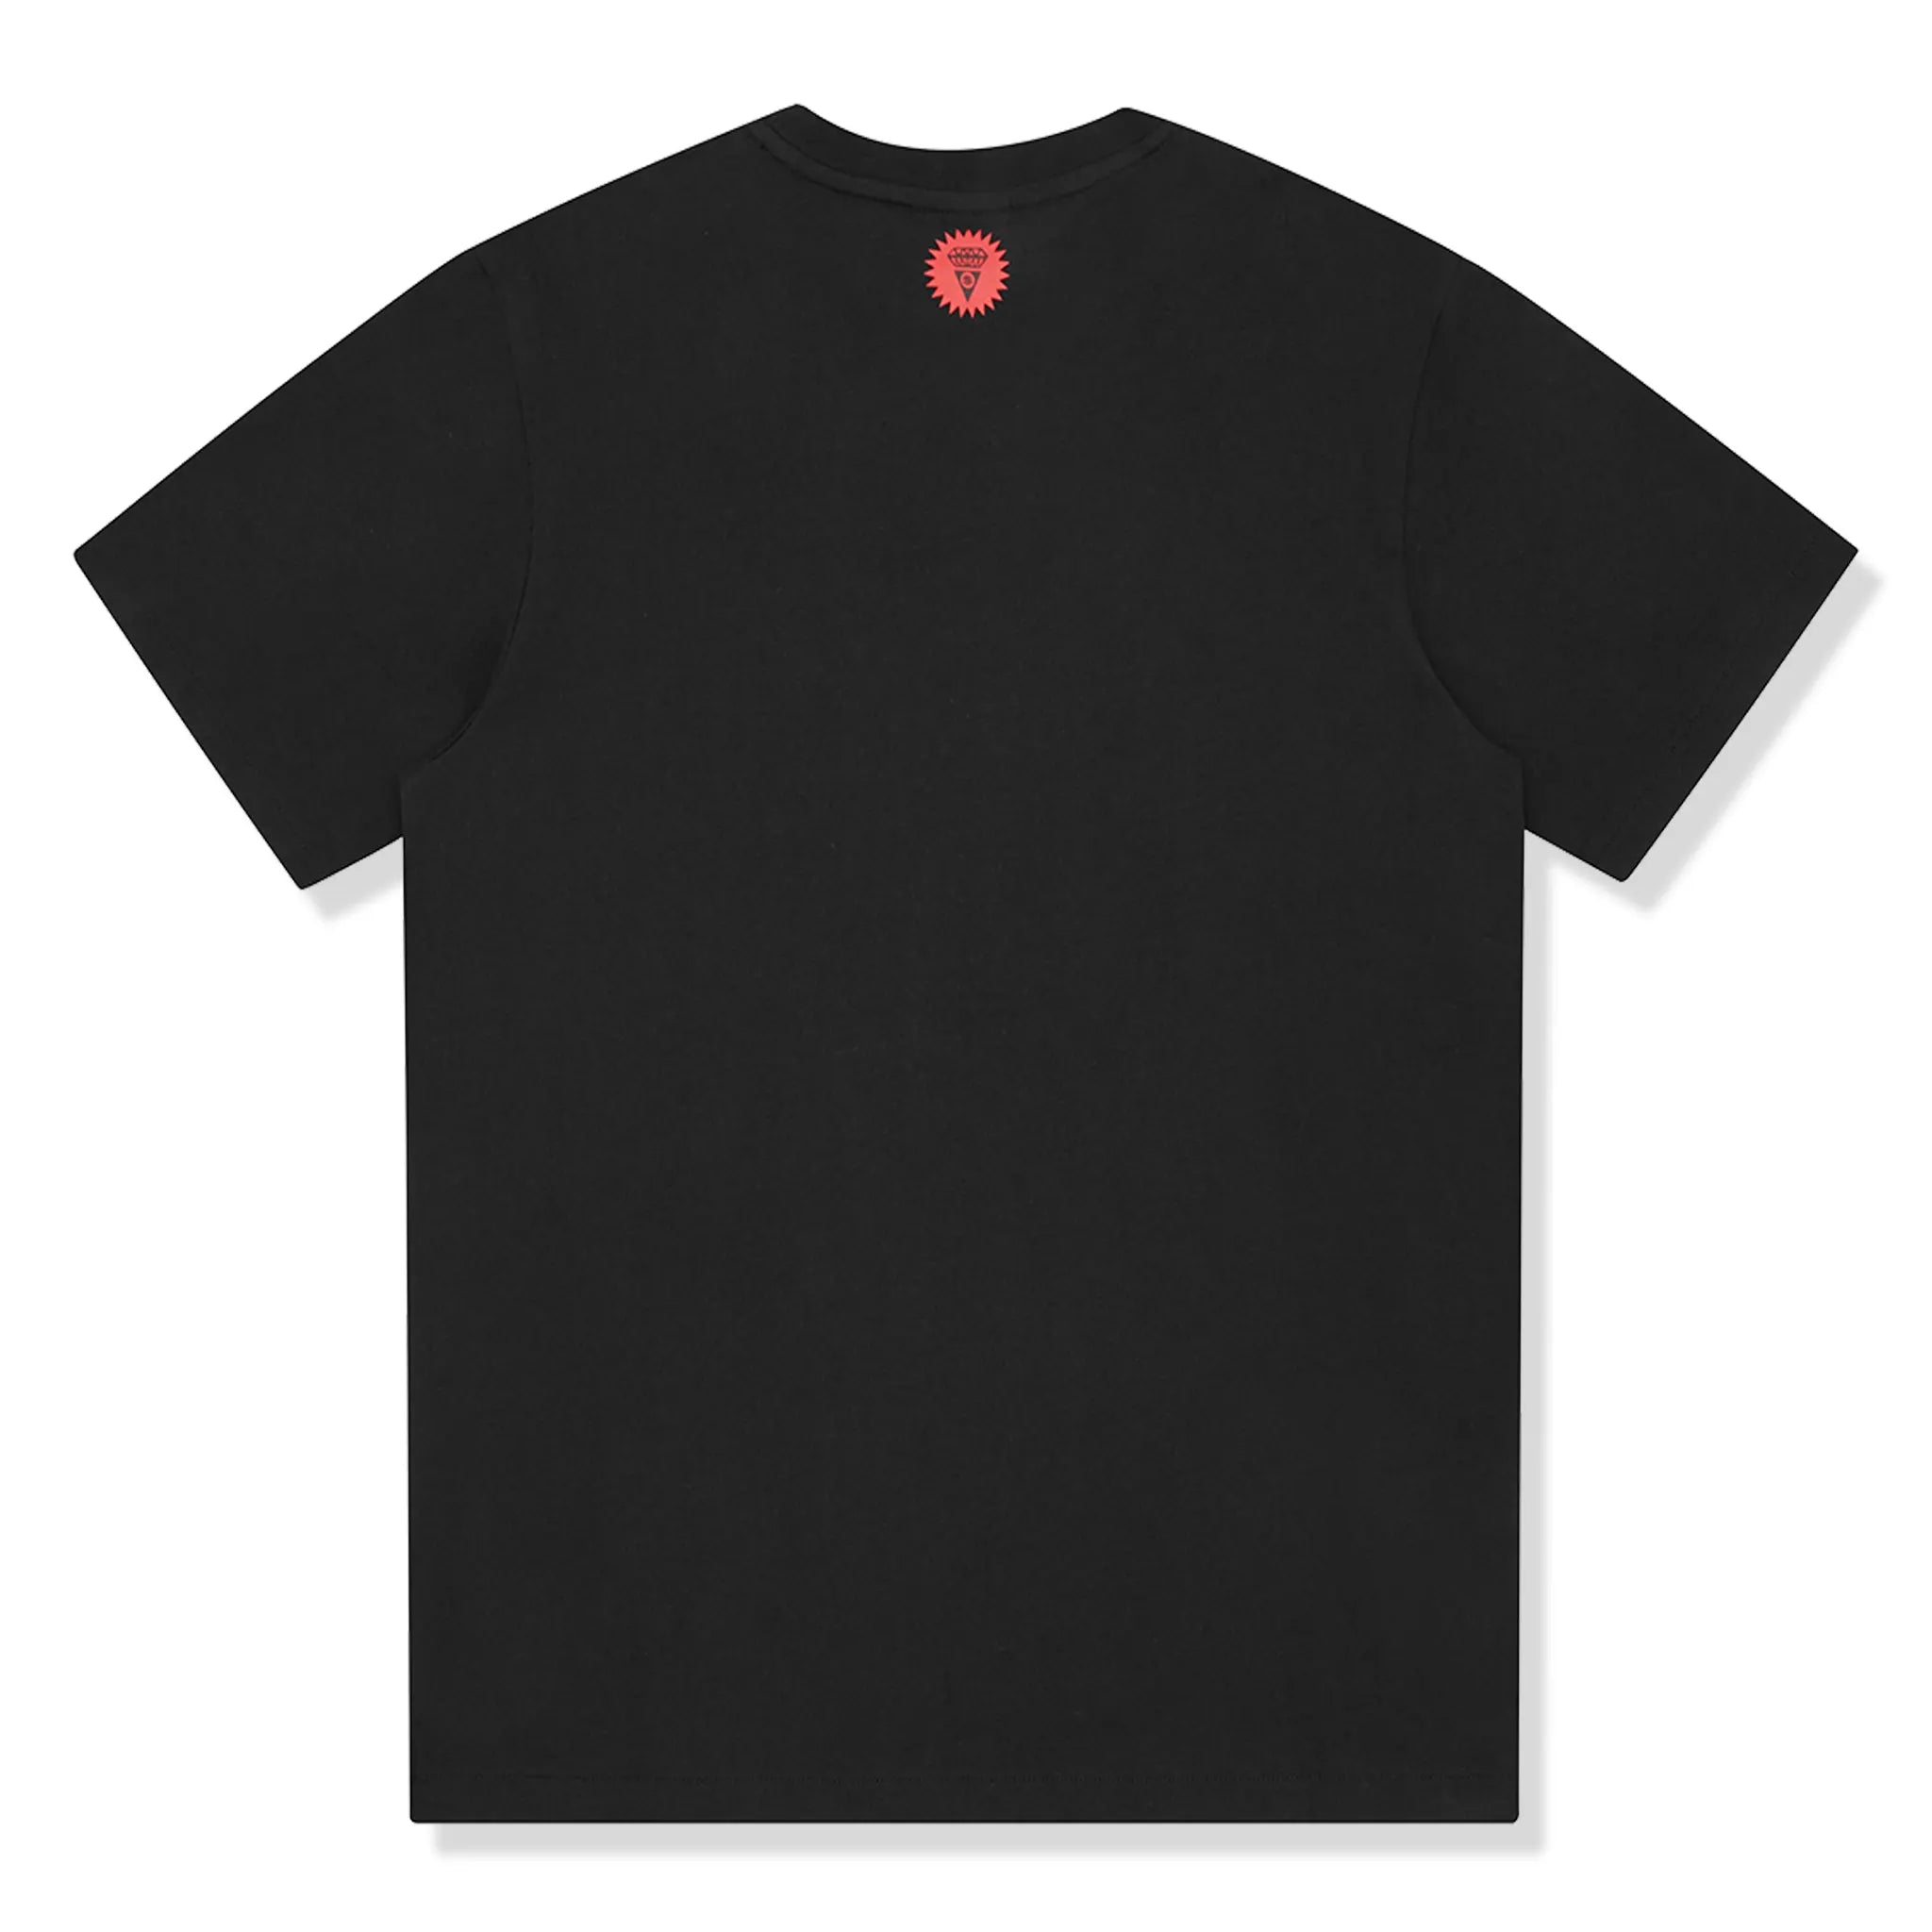 Back view of Icecream IC Running Dog Black T Shirt ic23449-blk